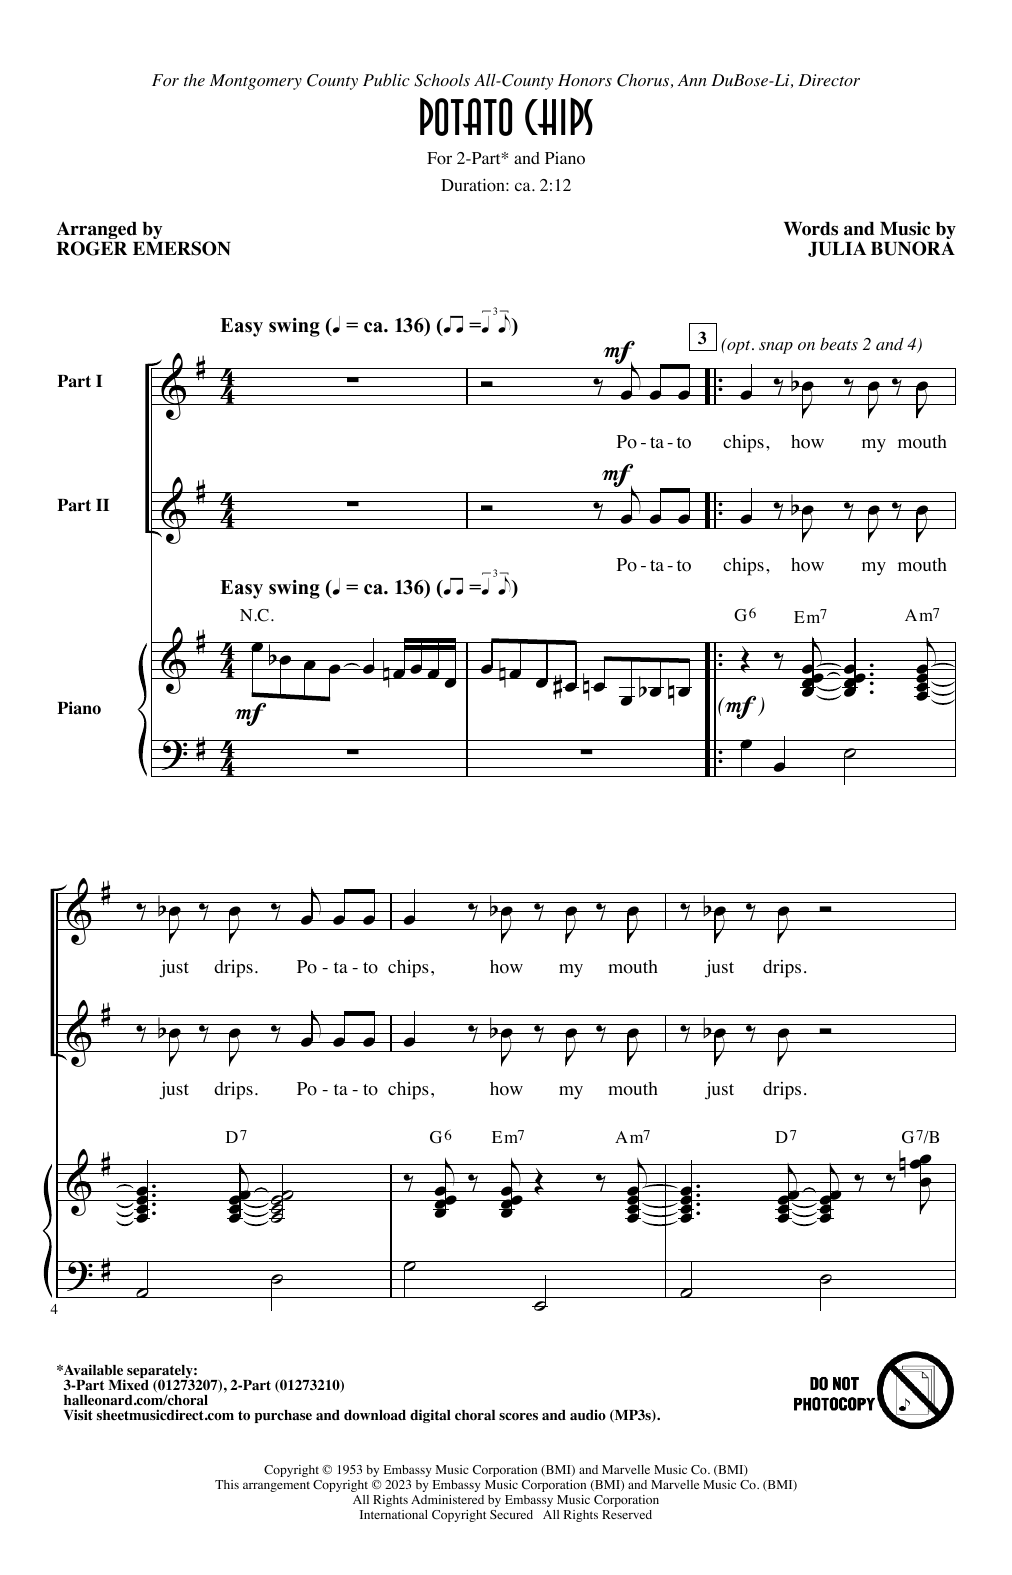 Julia Bunora Potato Chips (arr. Roger Emerson) Sheet Music Notes & Chords for 2-Part Choir - Download or Print PDF